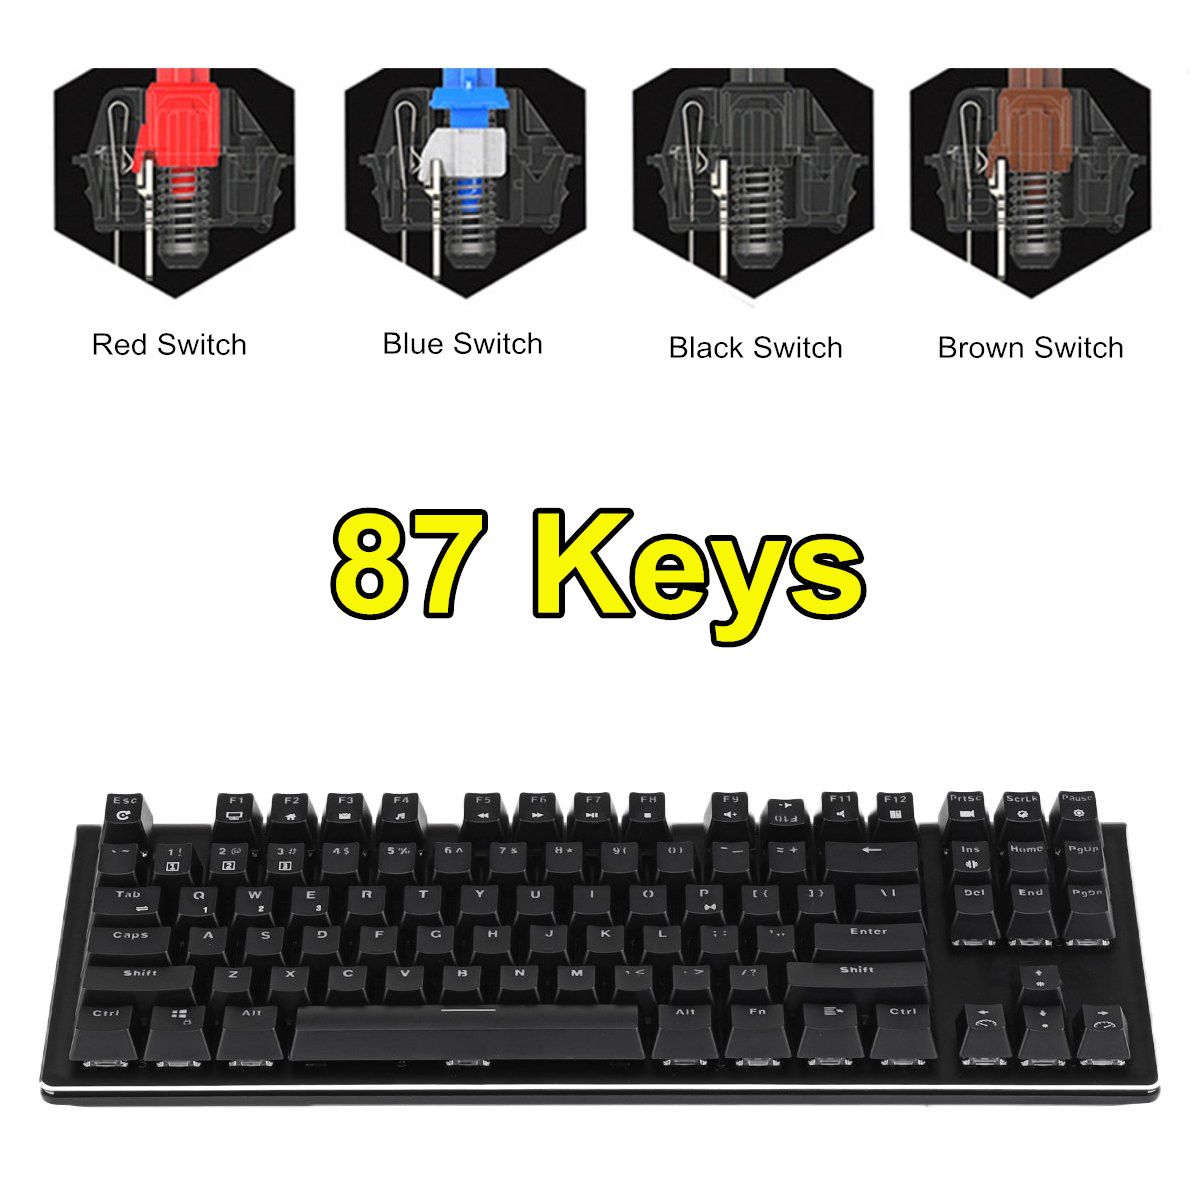 87-Keys-Dual-Mode-Mechanical-Keyboard-Type-C-WiredWireless-bluetooth-30-Gaming-Keyboard-with-RGB-Bac-1740753